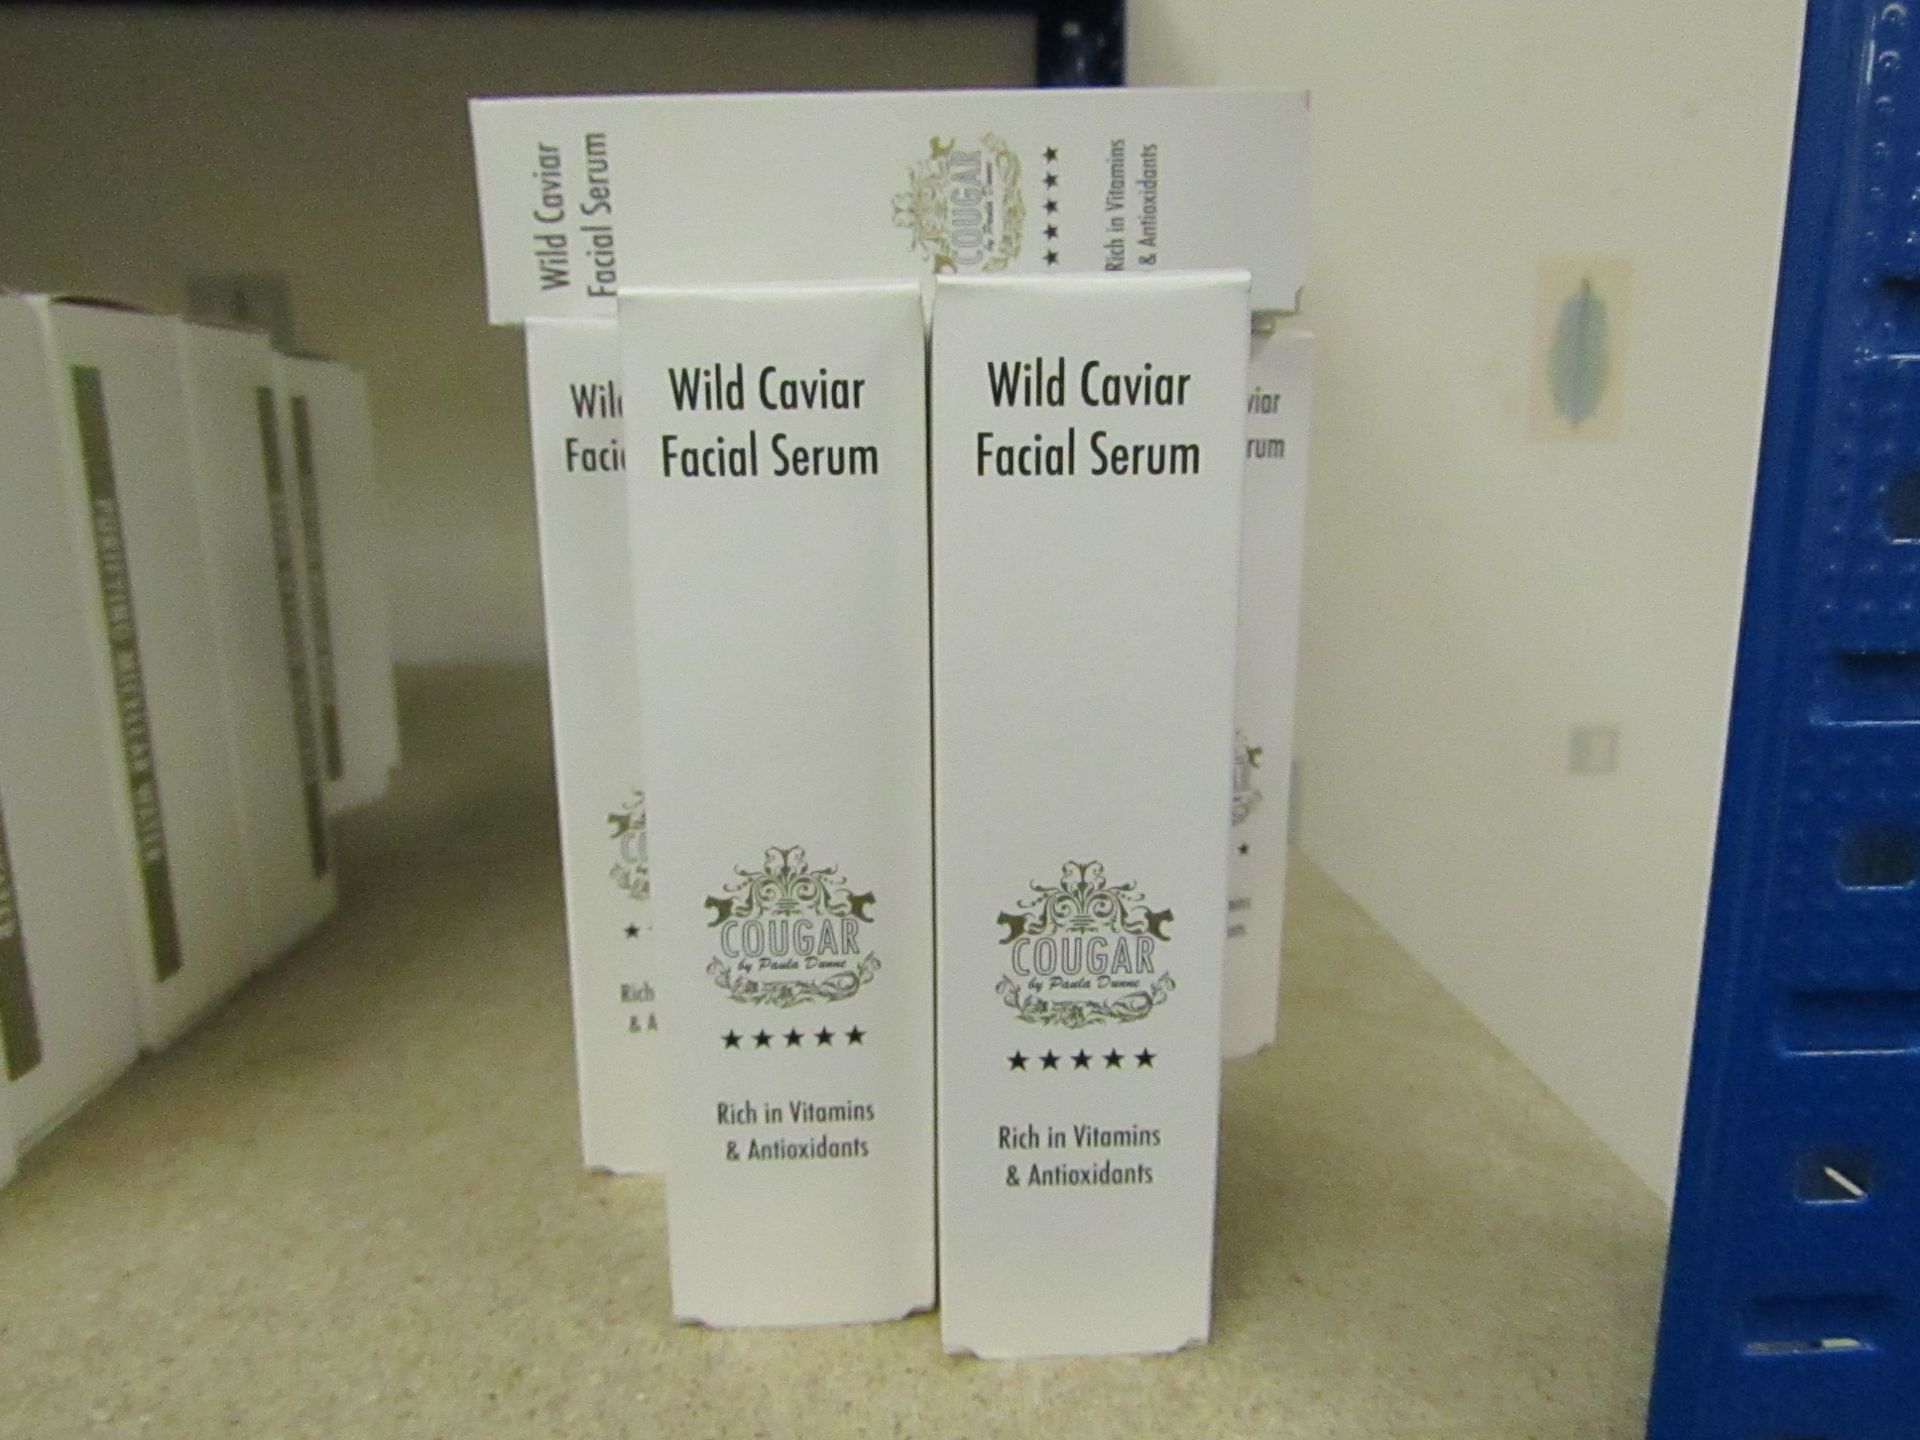 2 x Cougar 50ml Wild Caviar Facial Serum, both brand new and boxed.